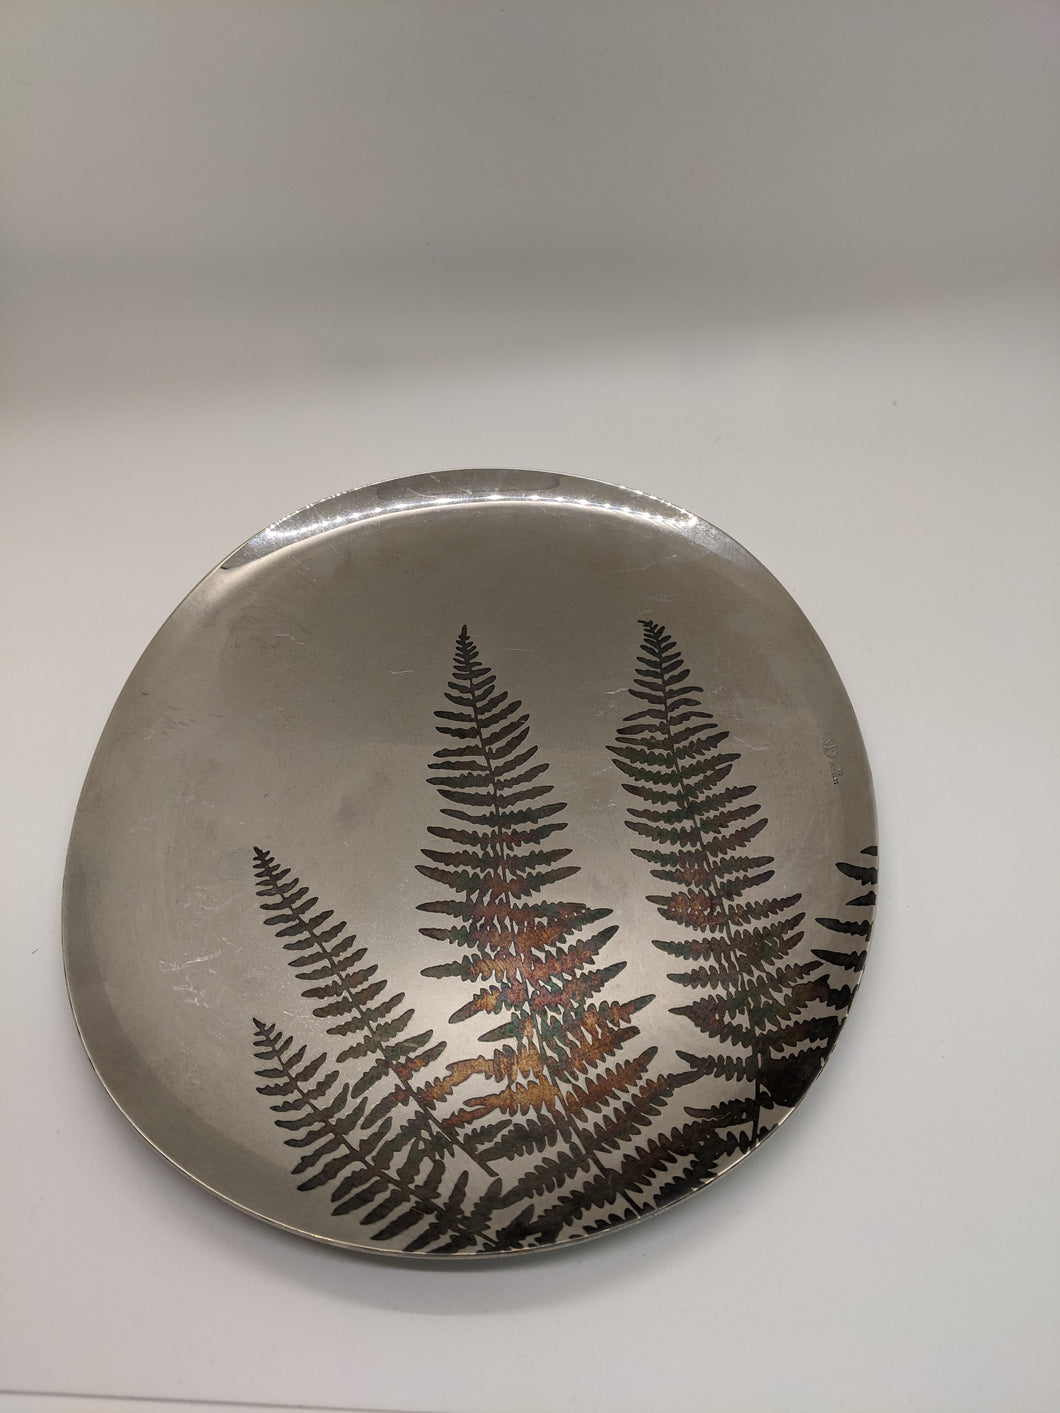 Rare Sambonet Silverplated Tray from Graffiti Collection